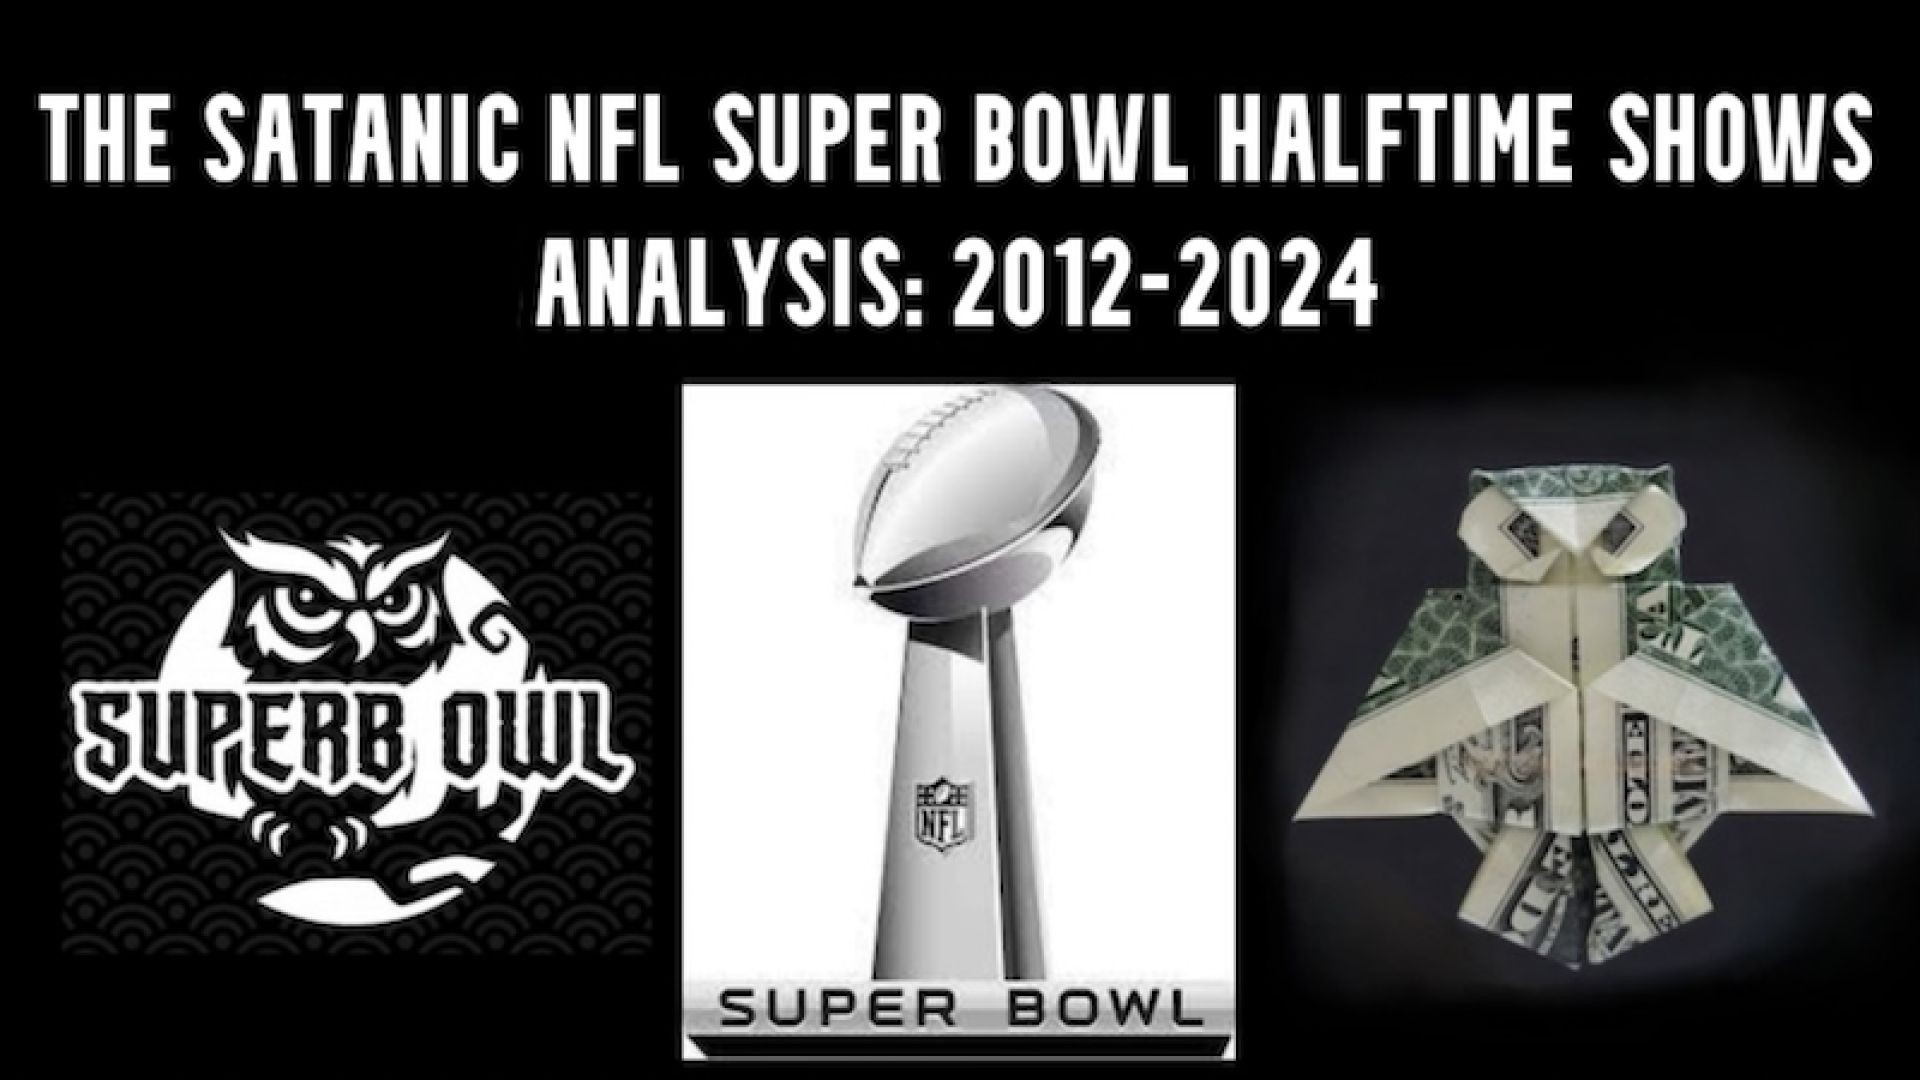 THE SATANIC NFL SUPER BOWL HALFTIME SHOWS, ANALYSIS: 2012 2024